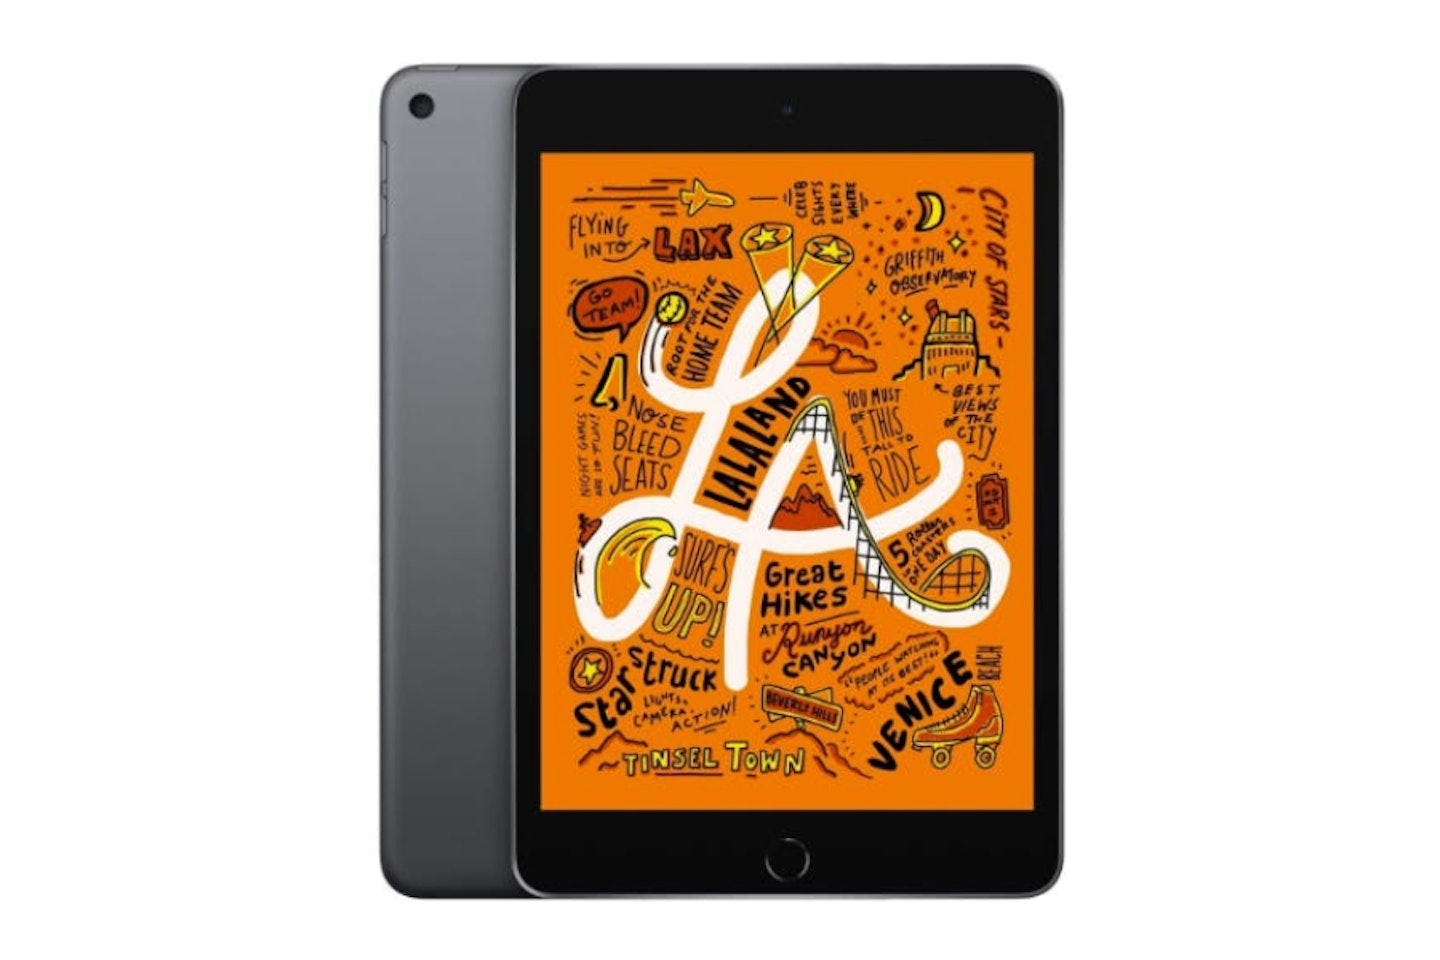 Apple iPad Mini (2019) - one of the best mini tablets